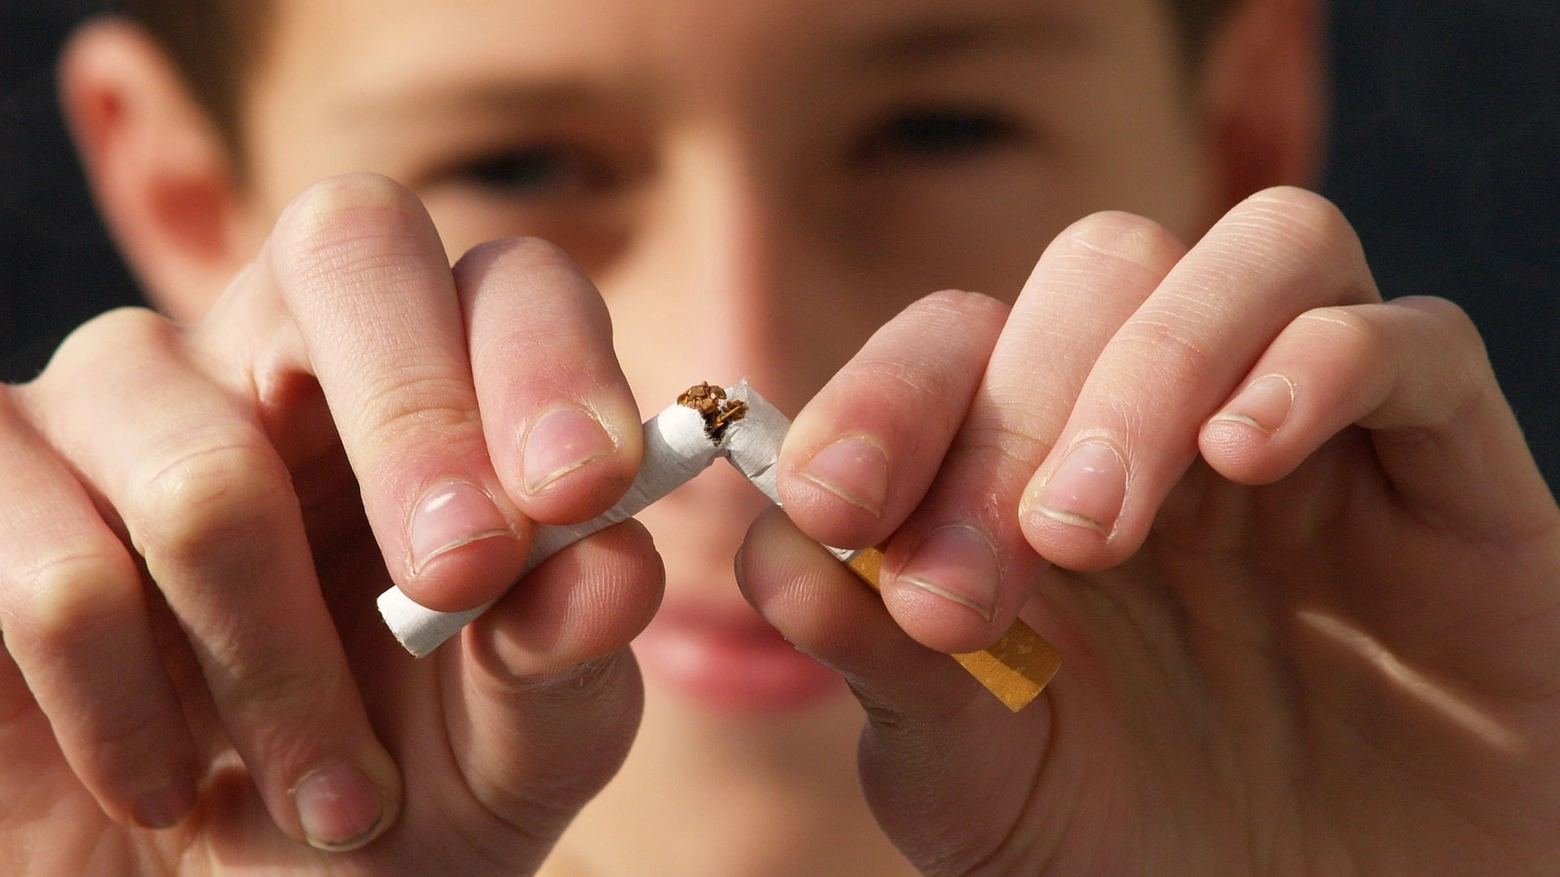 In Nuova Zelanda sigarette vietate a nati dal 2009